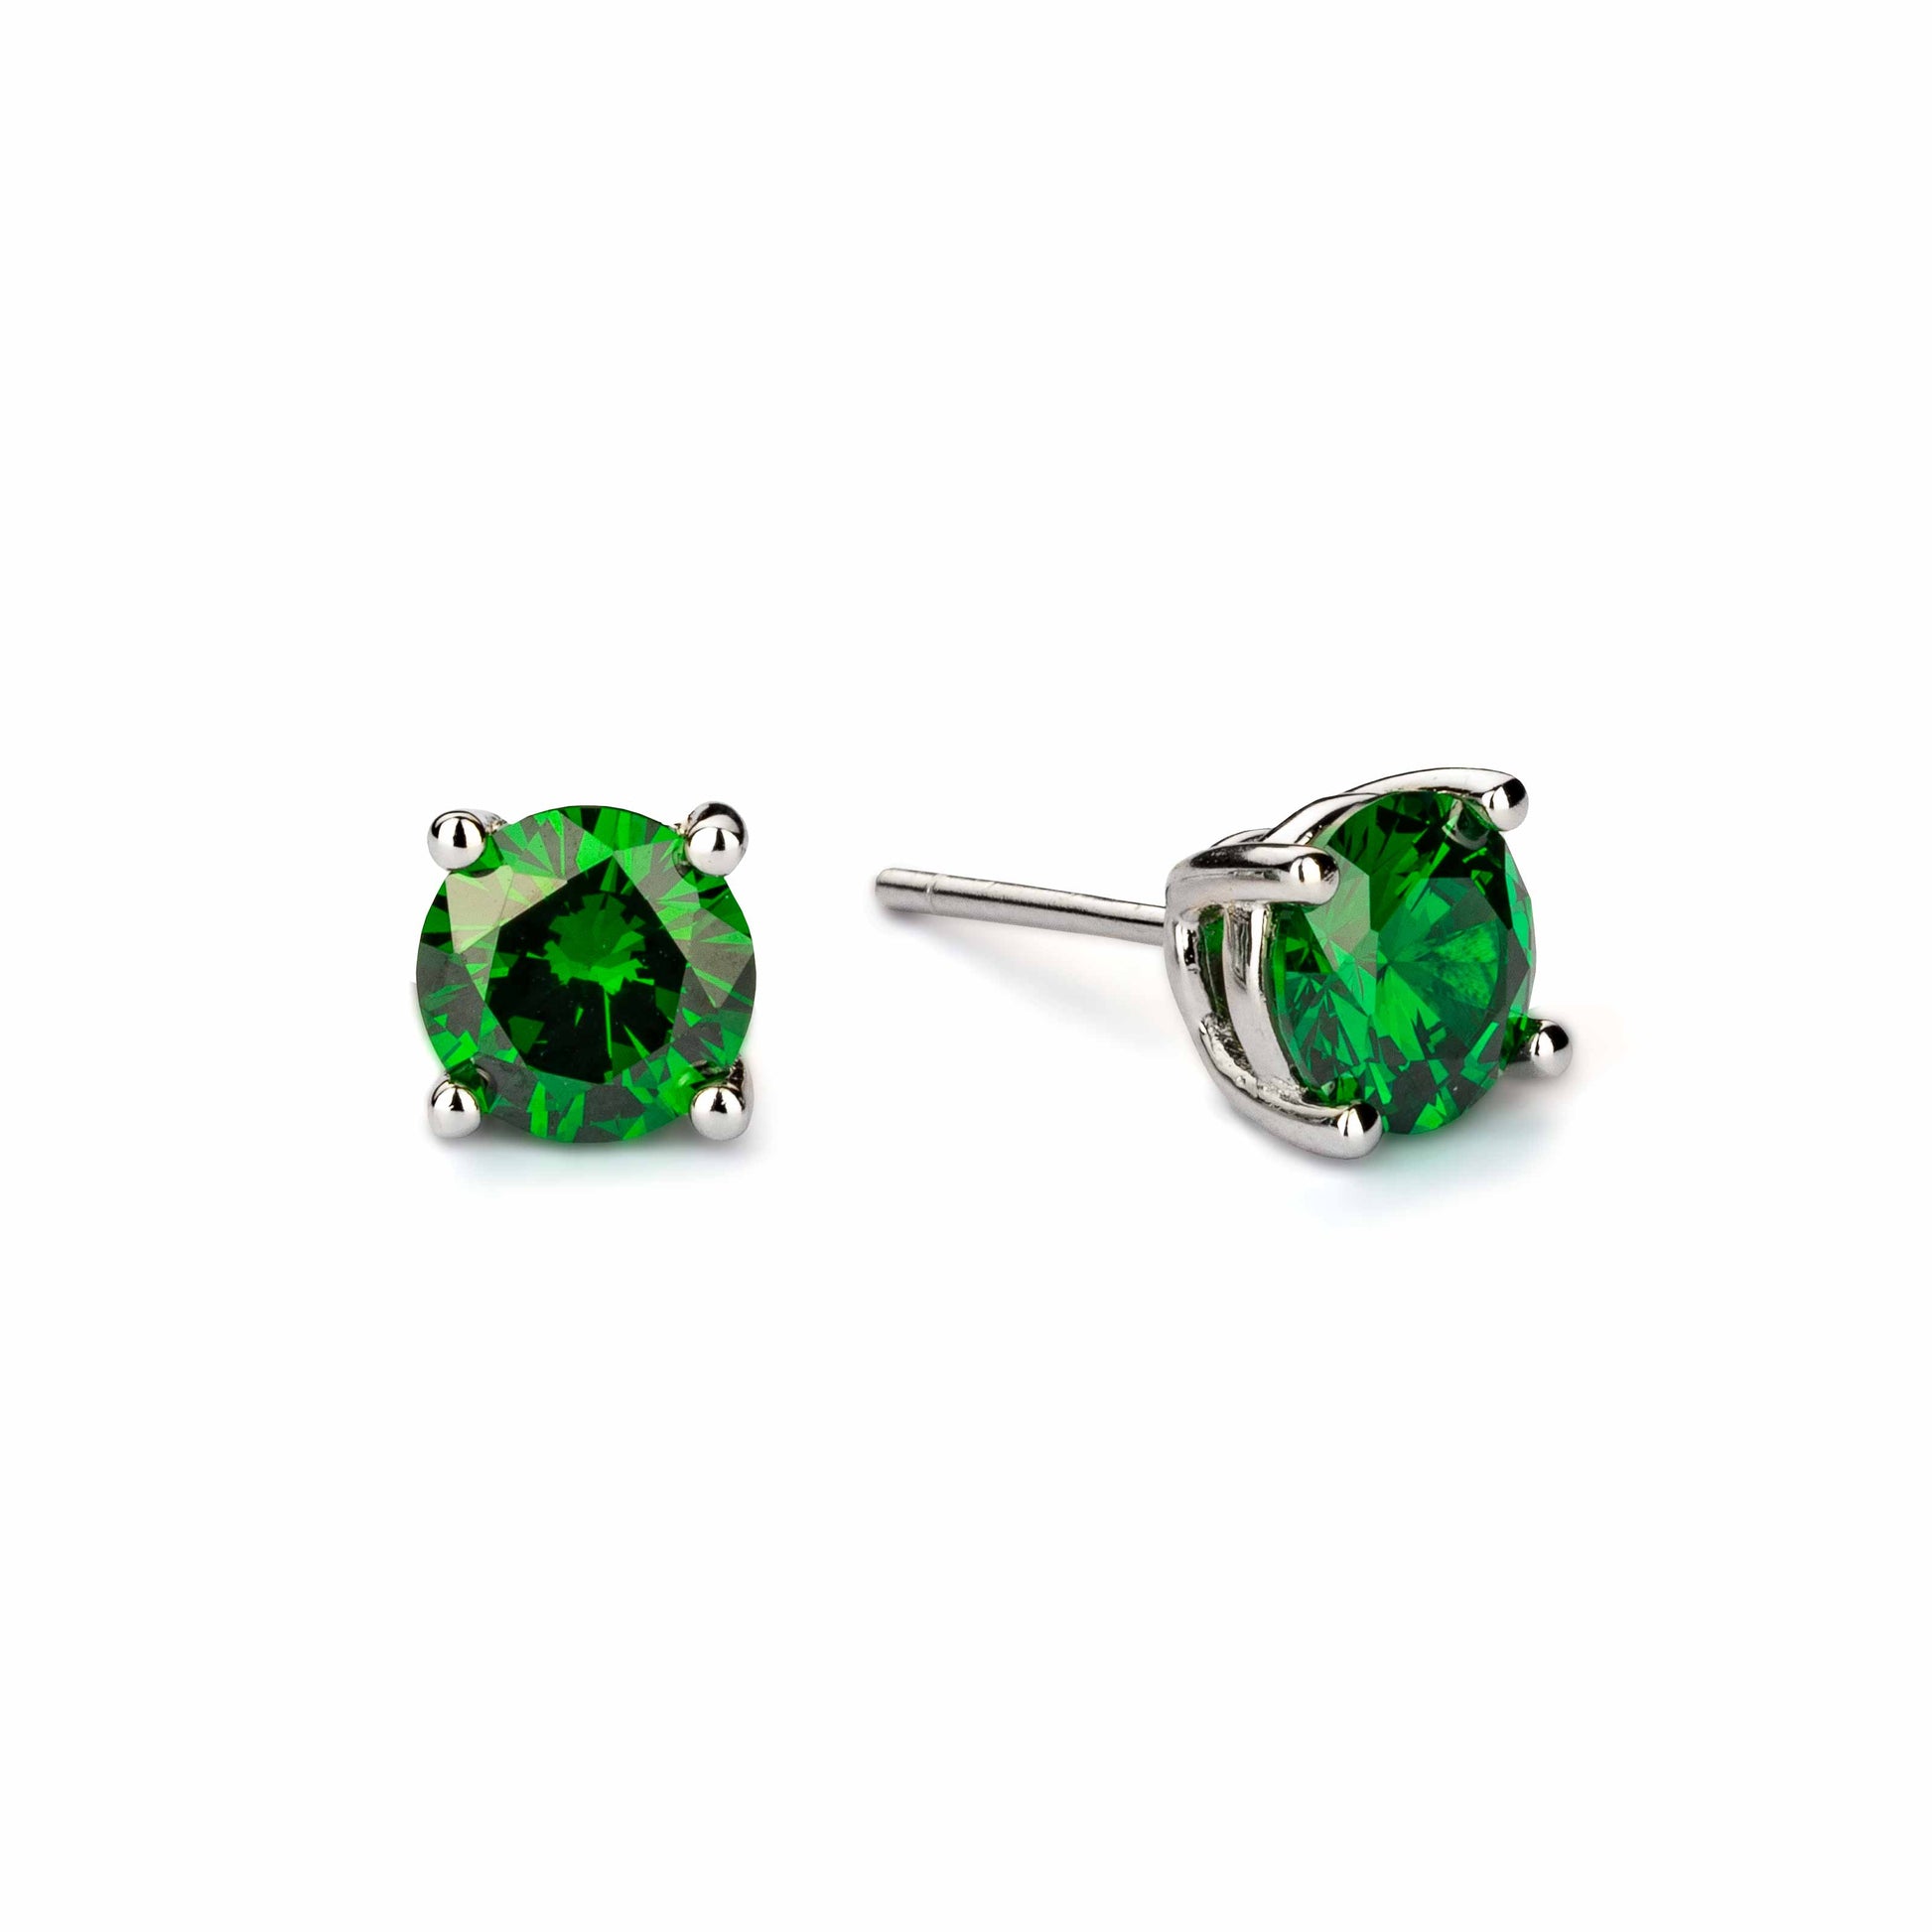 Lu Bella May Birthstone Earrings - Emerald - LBBE005